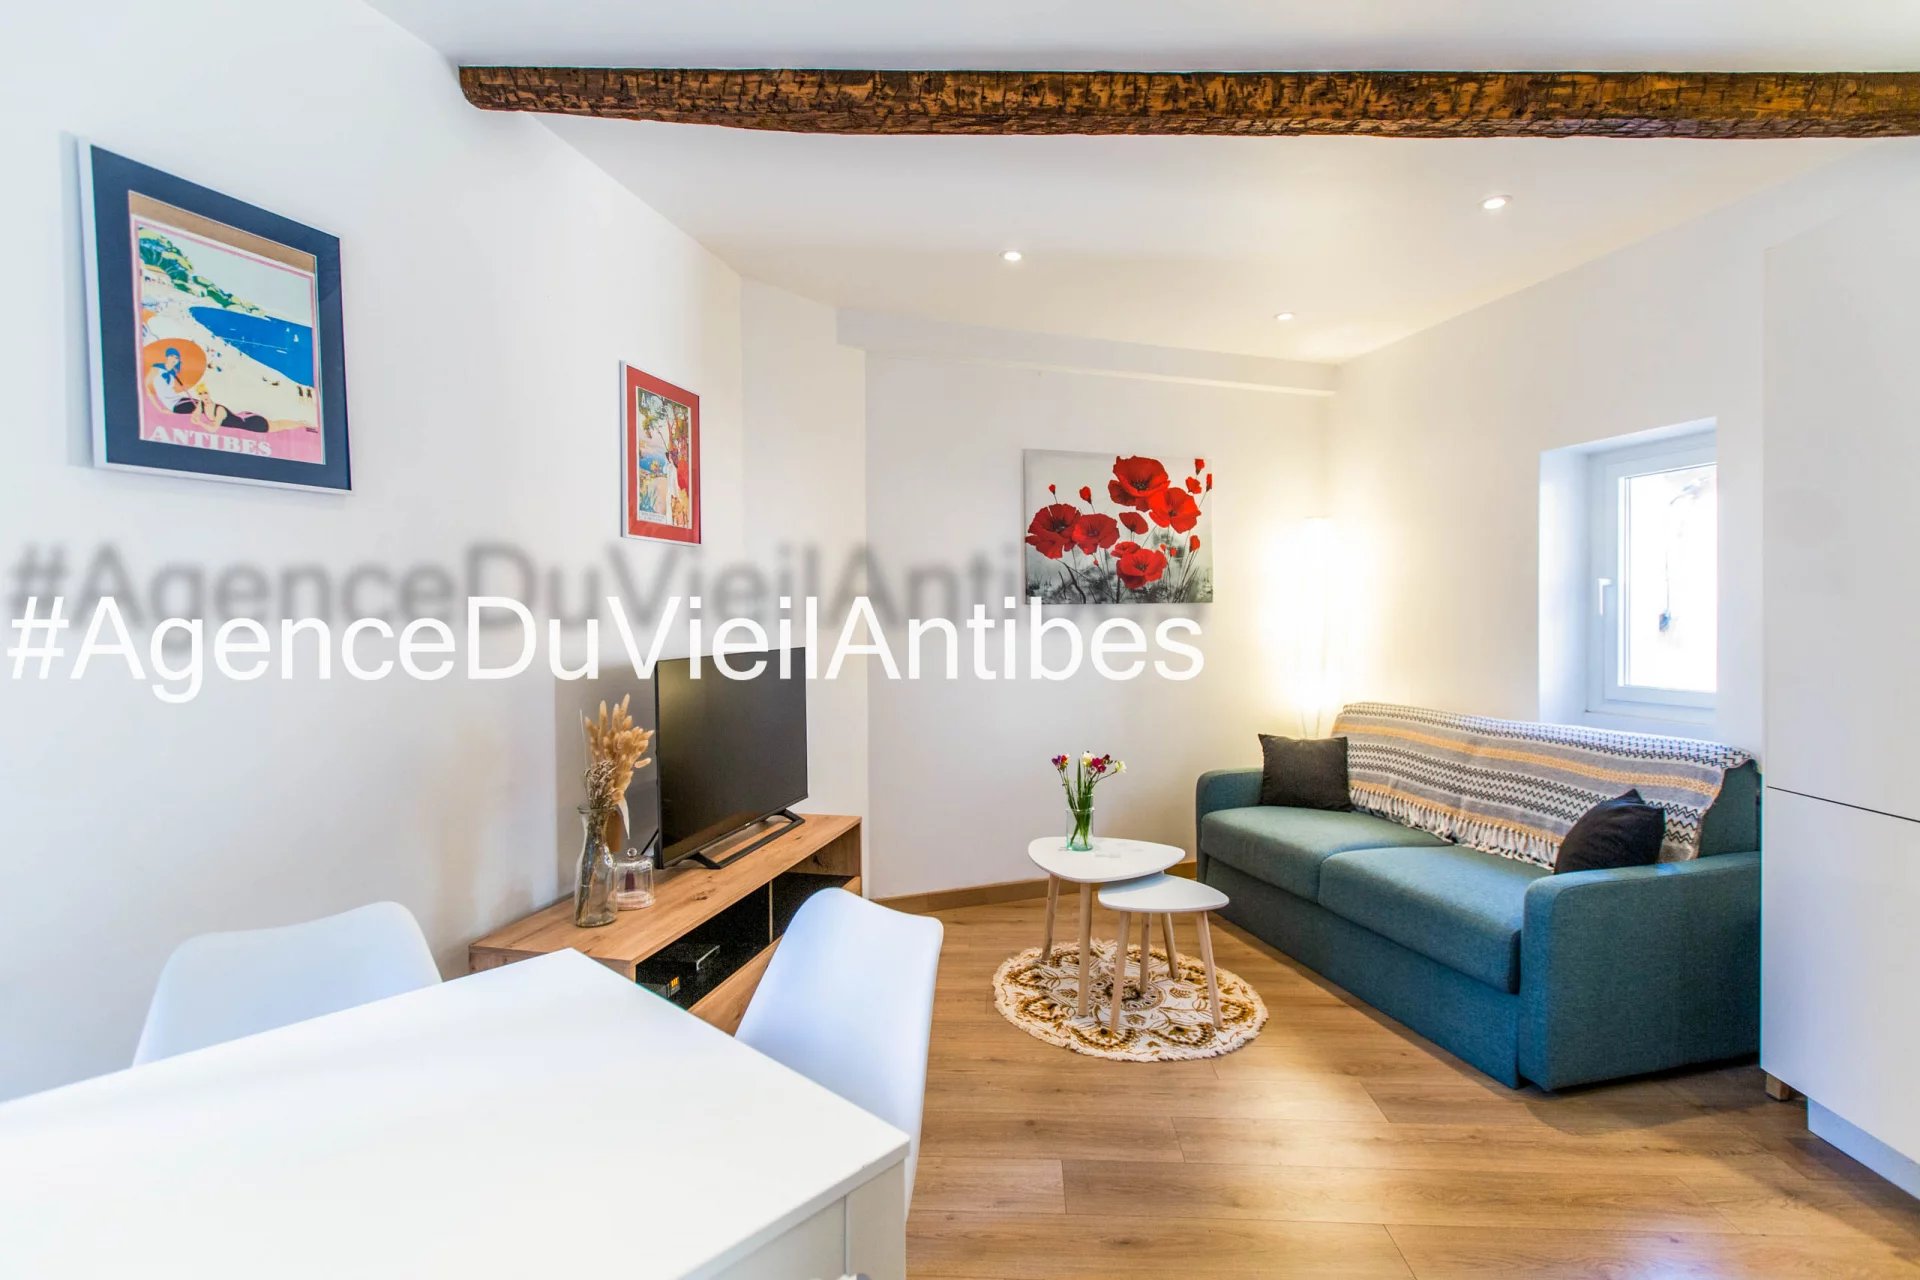 VIEIL ANTIBES - 2p de 33 m² loué meublé de Septembre a Juin